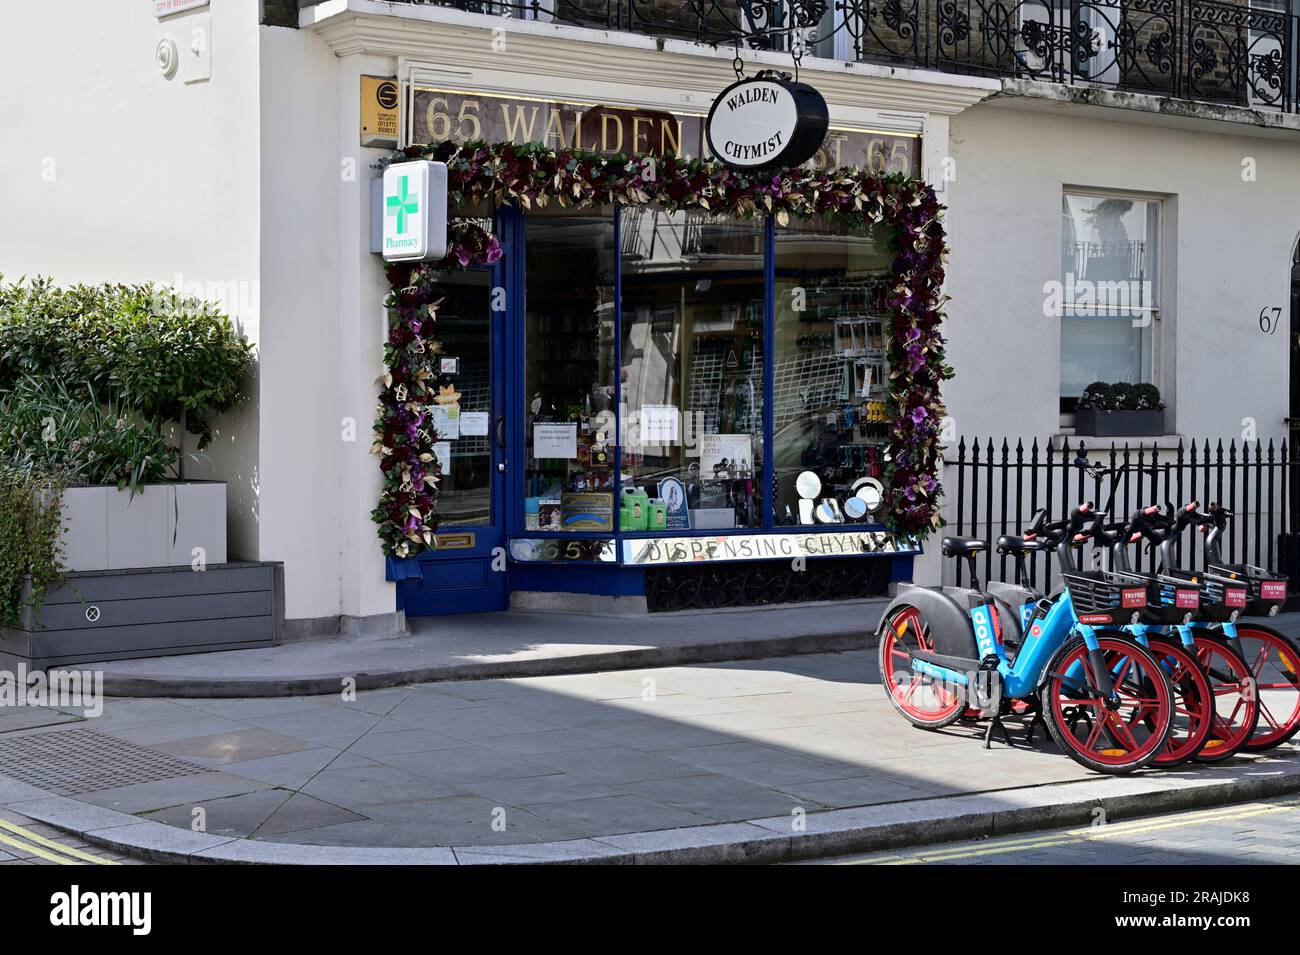 Walden Chymist (chemist) shop and electric Cycle Hire, Elizabeth Street, Belgavia, West London, United Kingdom Stock Photo